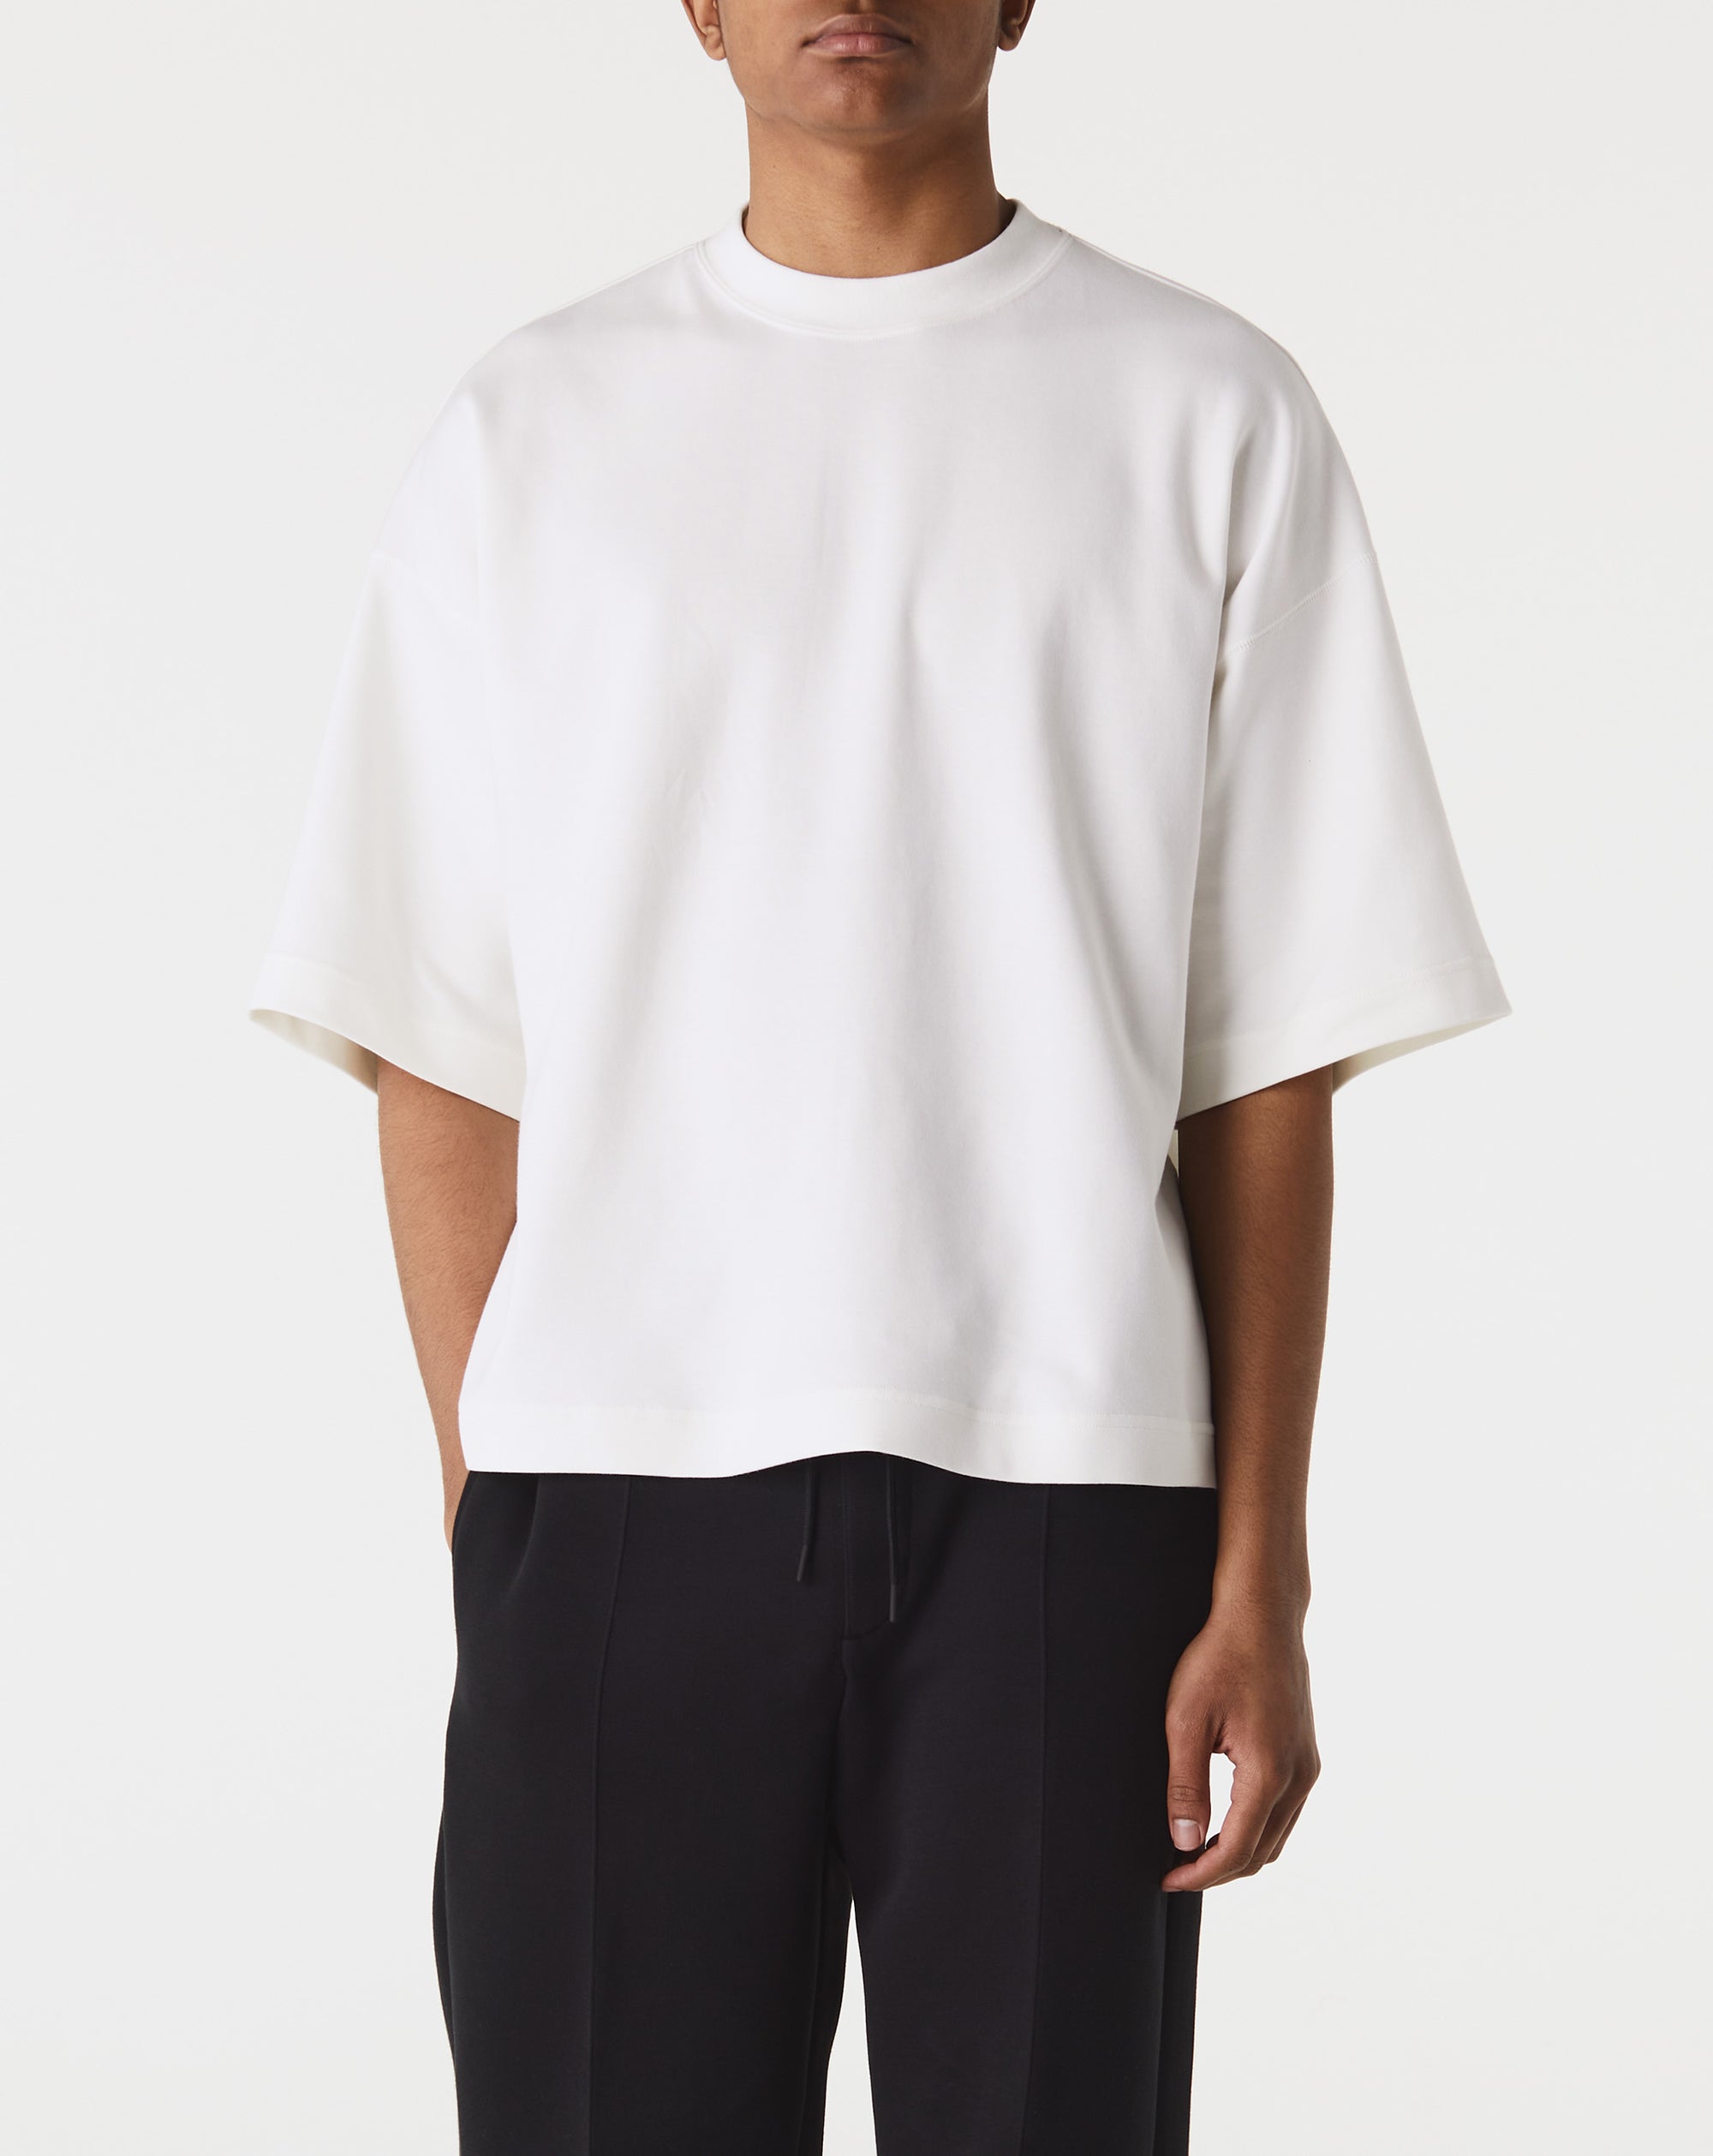 Nike Tech Fleece Reimagined Oversized Short-Sleeve Sweatshirt - Rule of Next Apparel